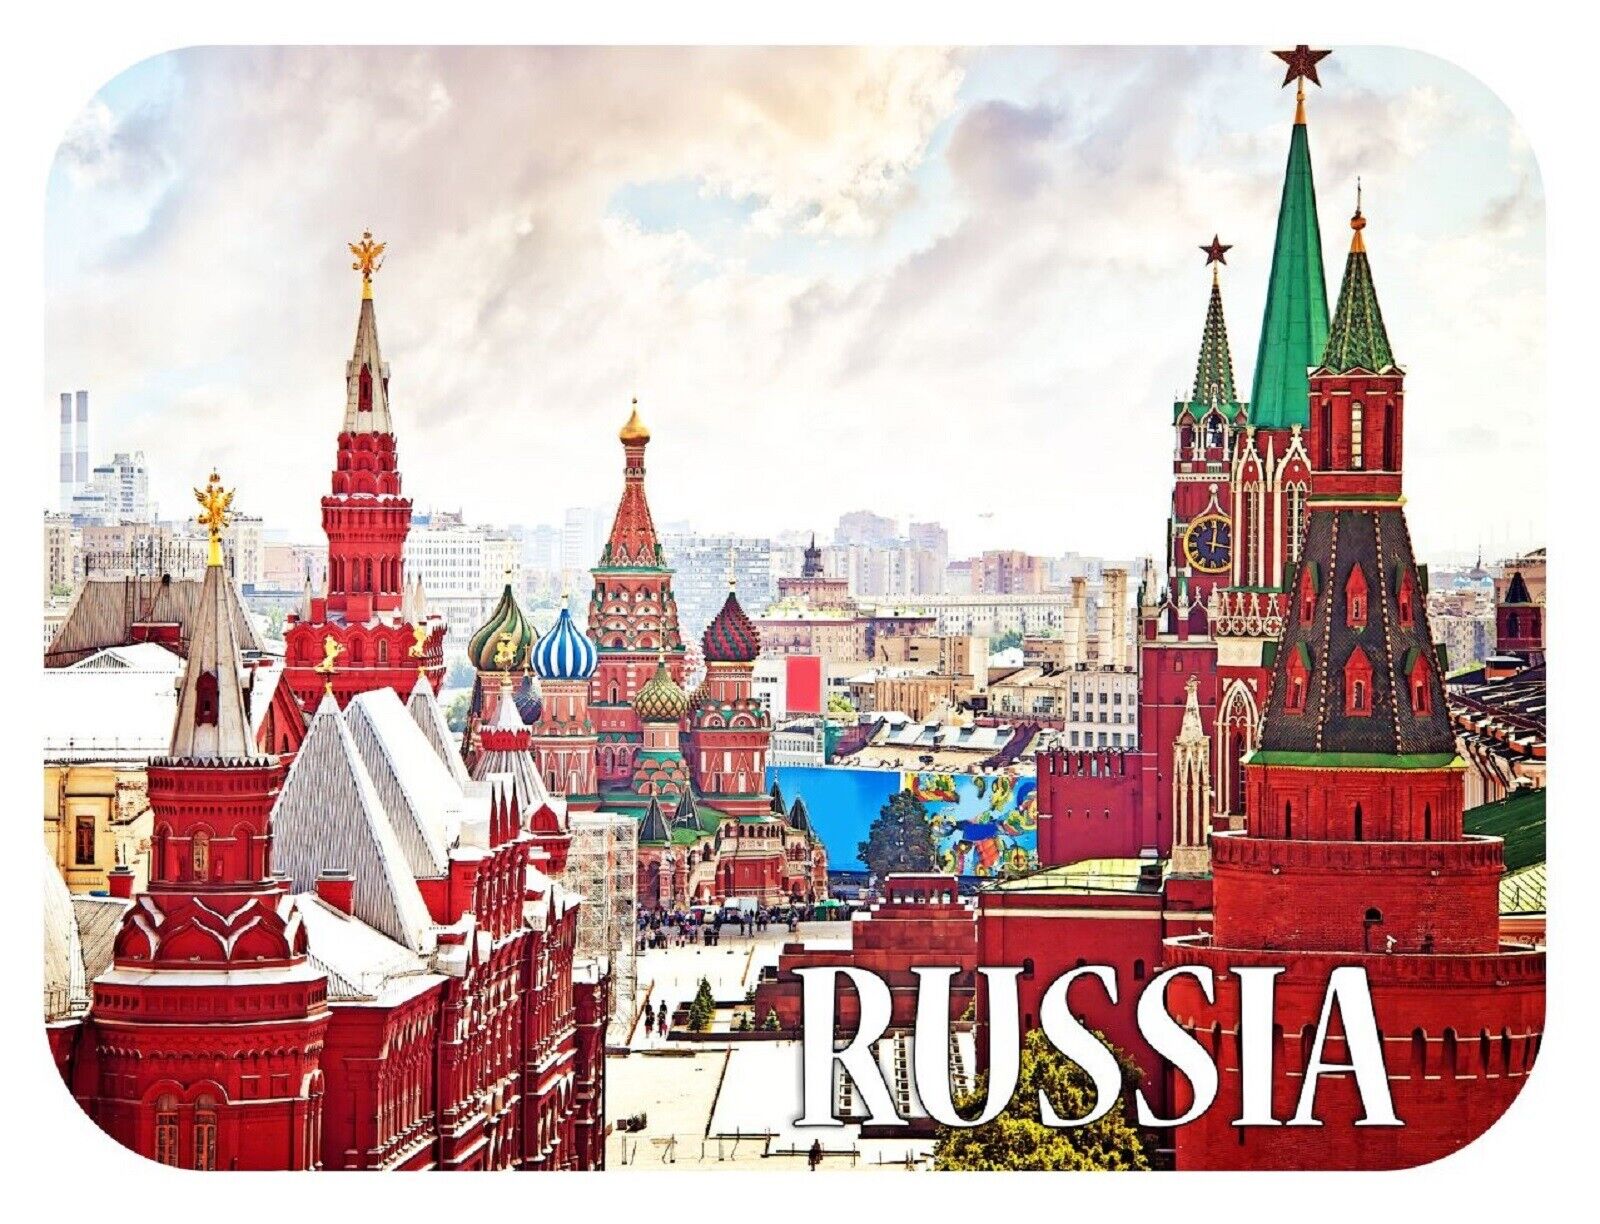 Russia with The Kremlin Fridge Magnet 